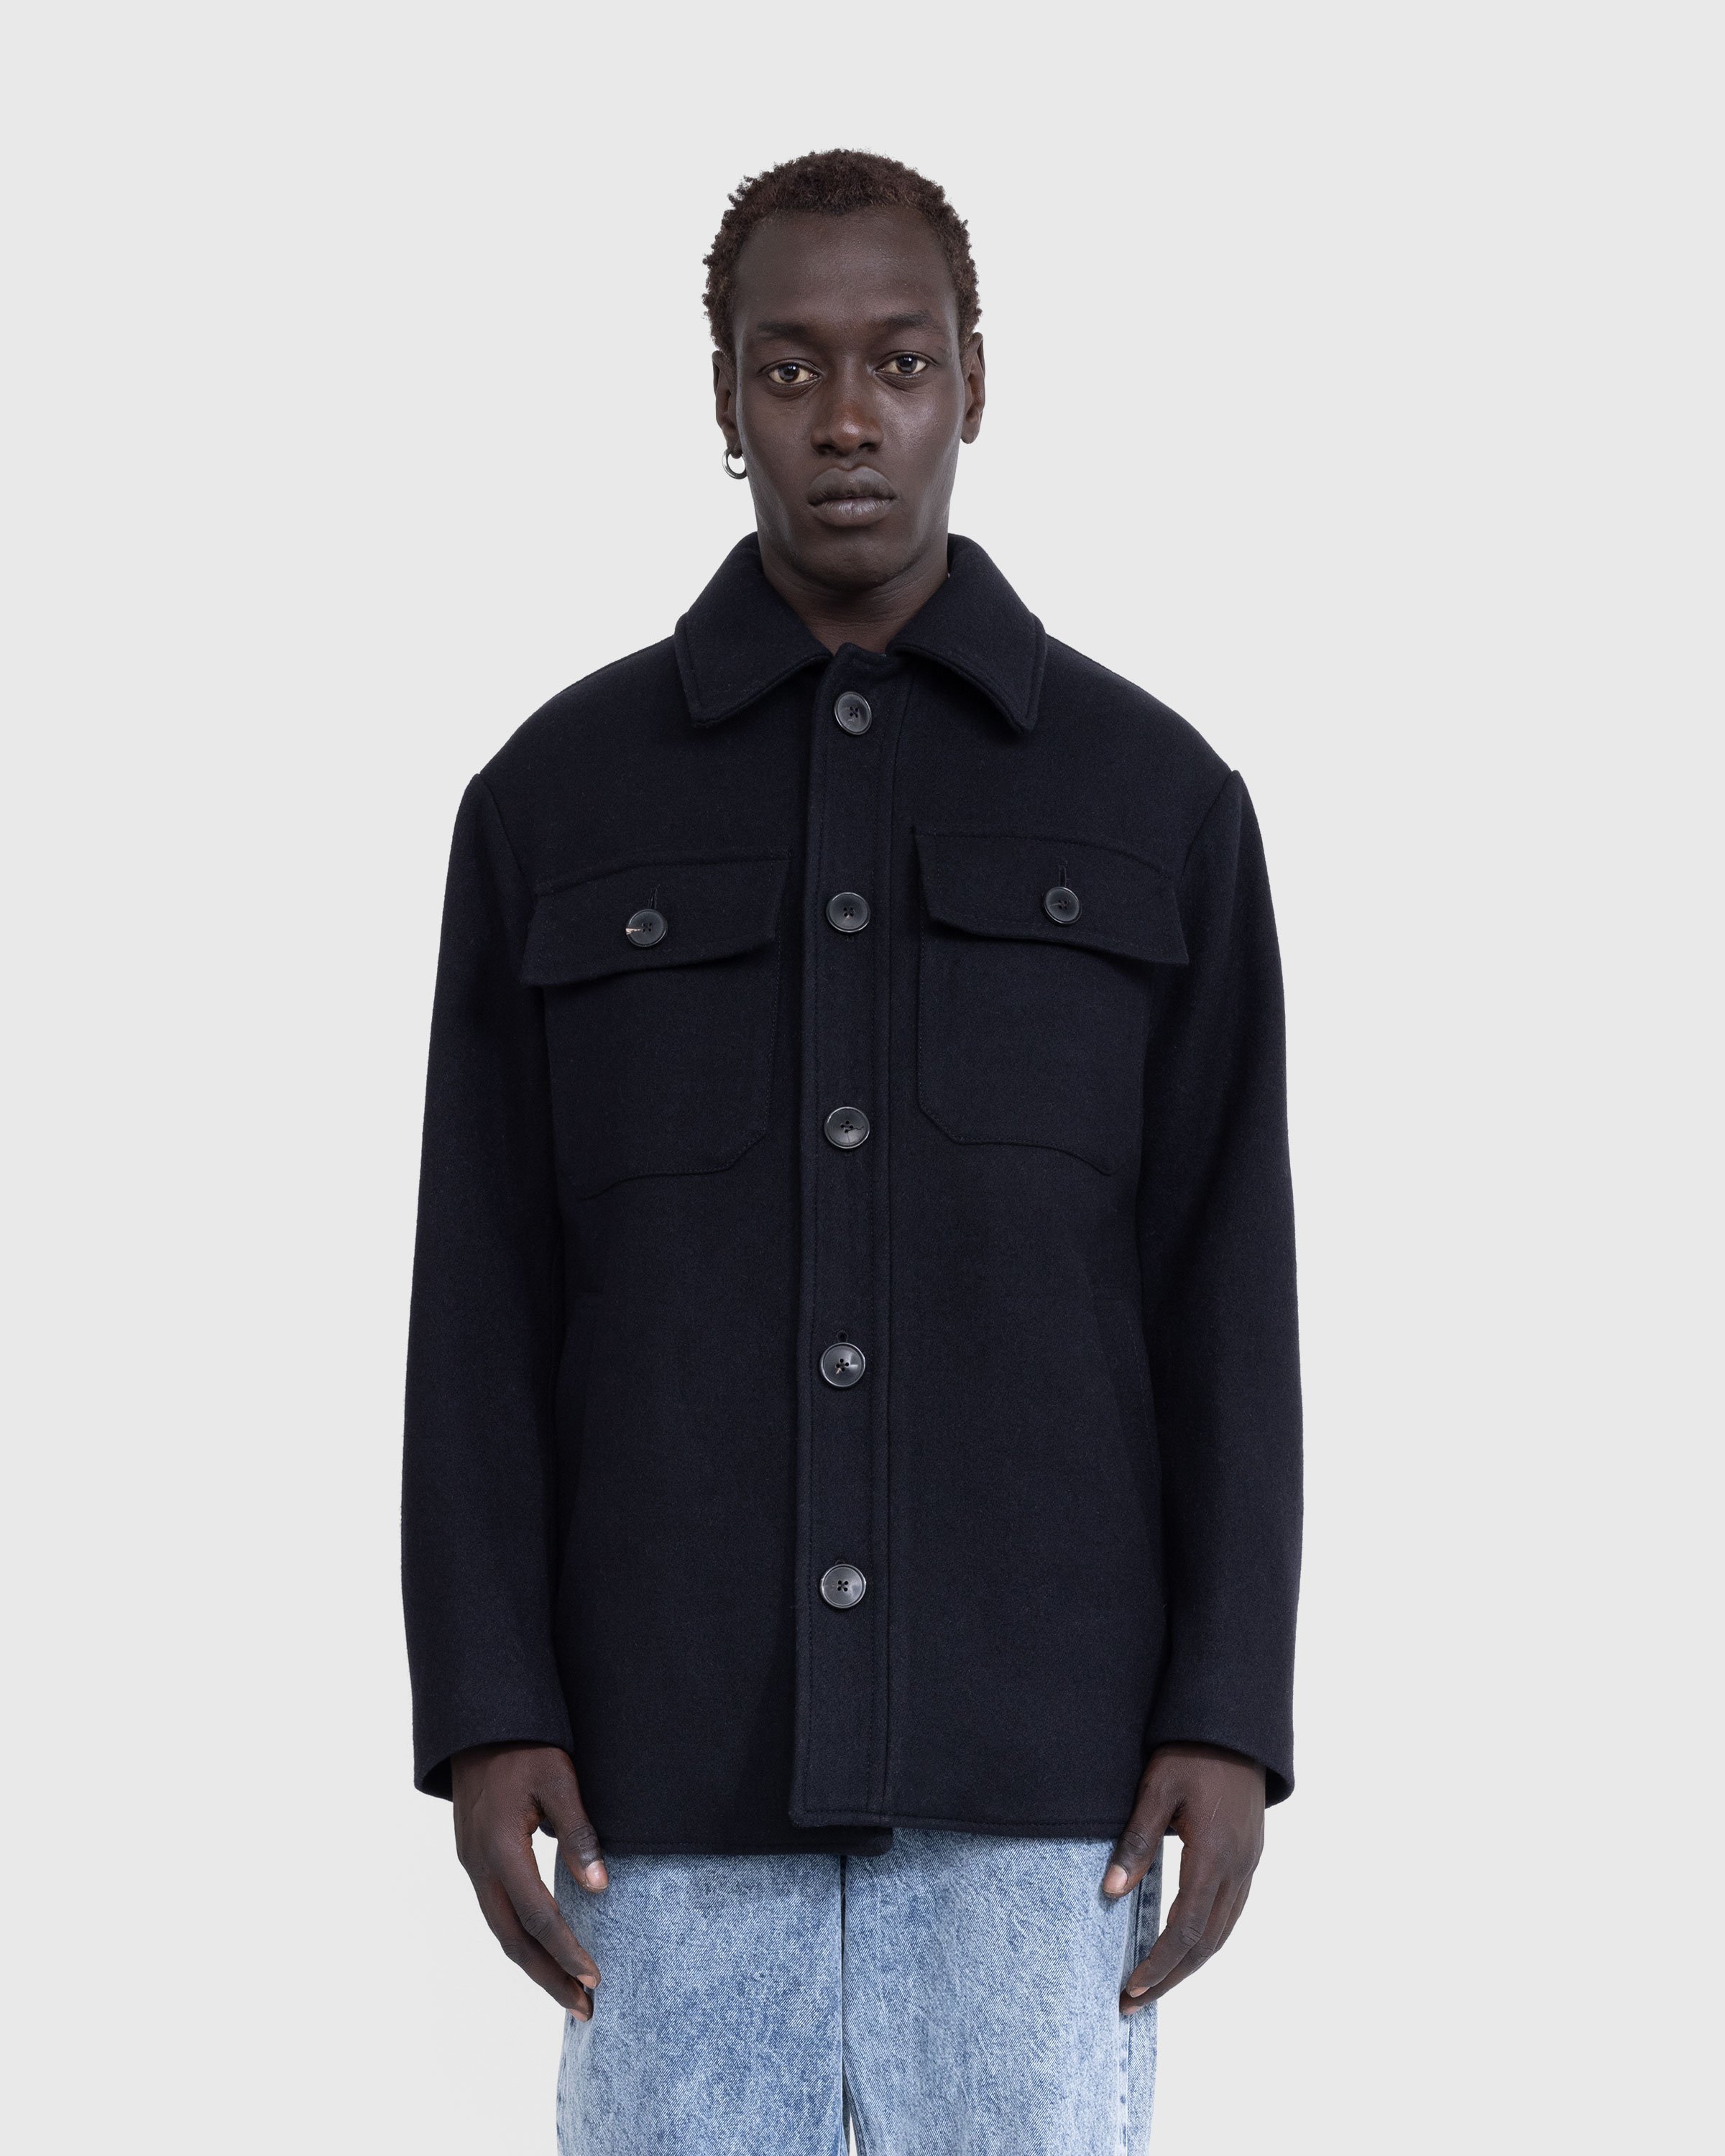 Dries van Noten - Valko Jacket Black - Clothing - Black - Image 2